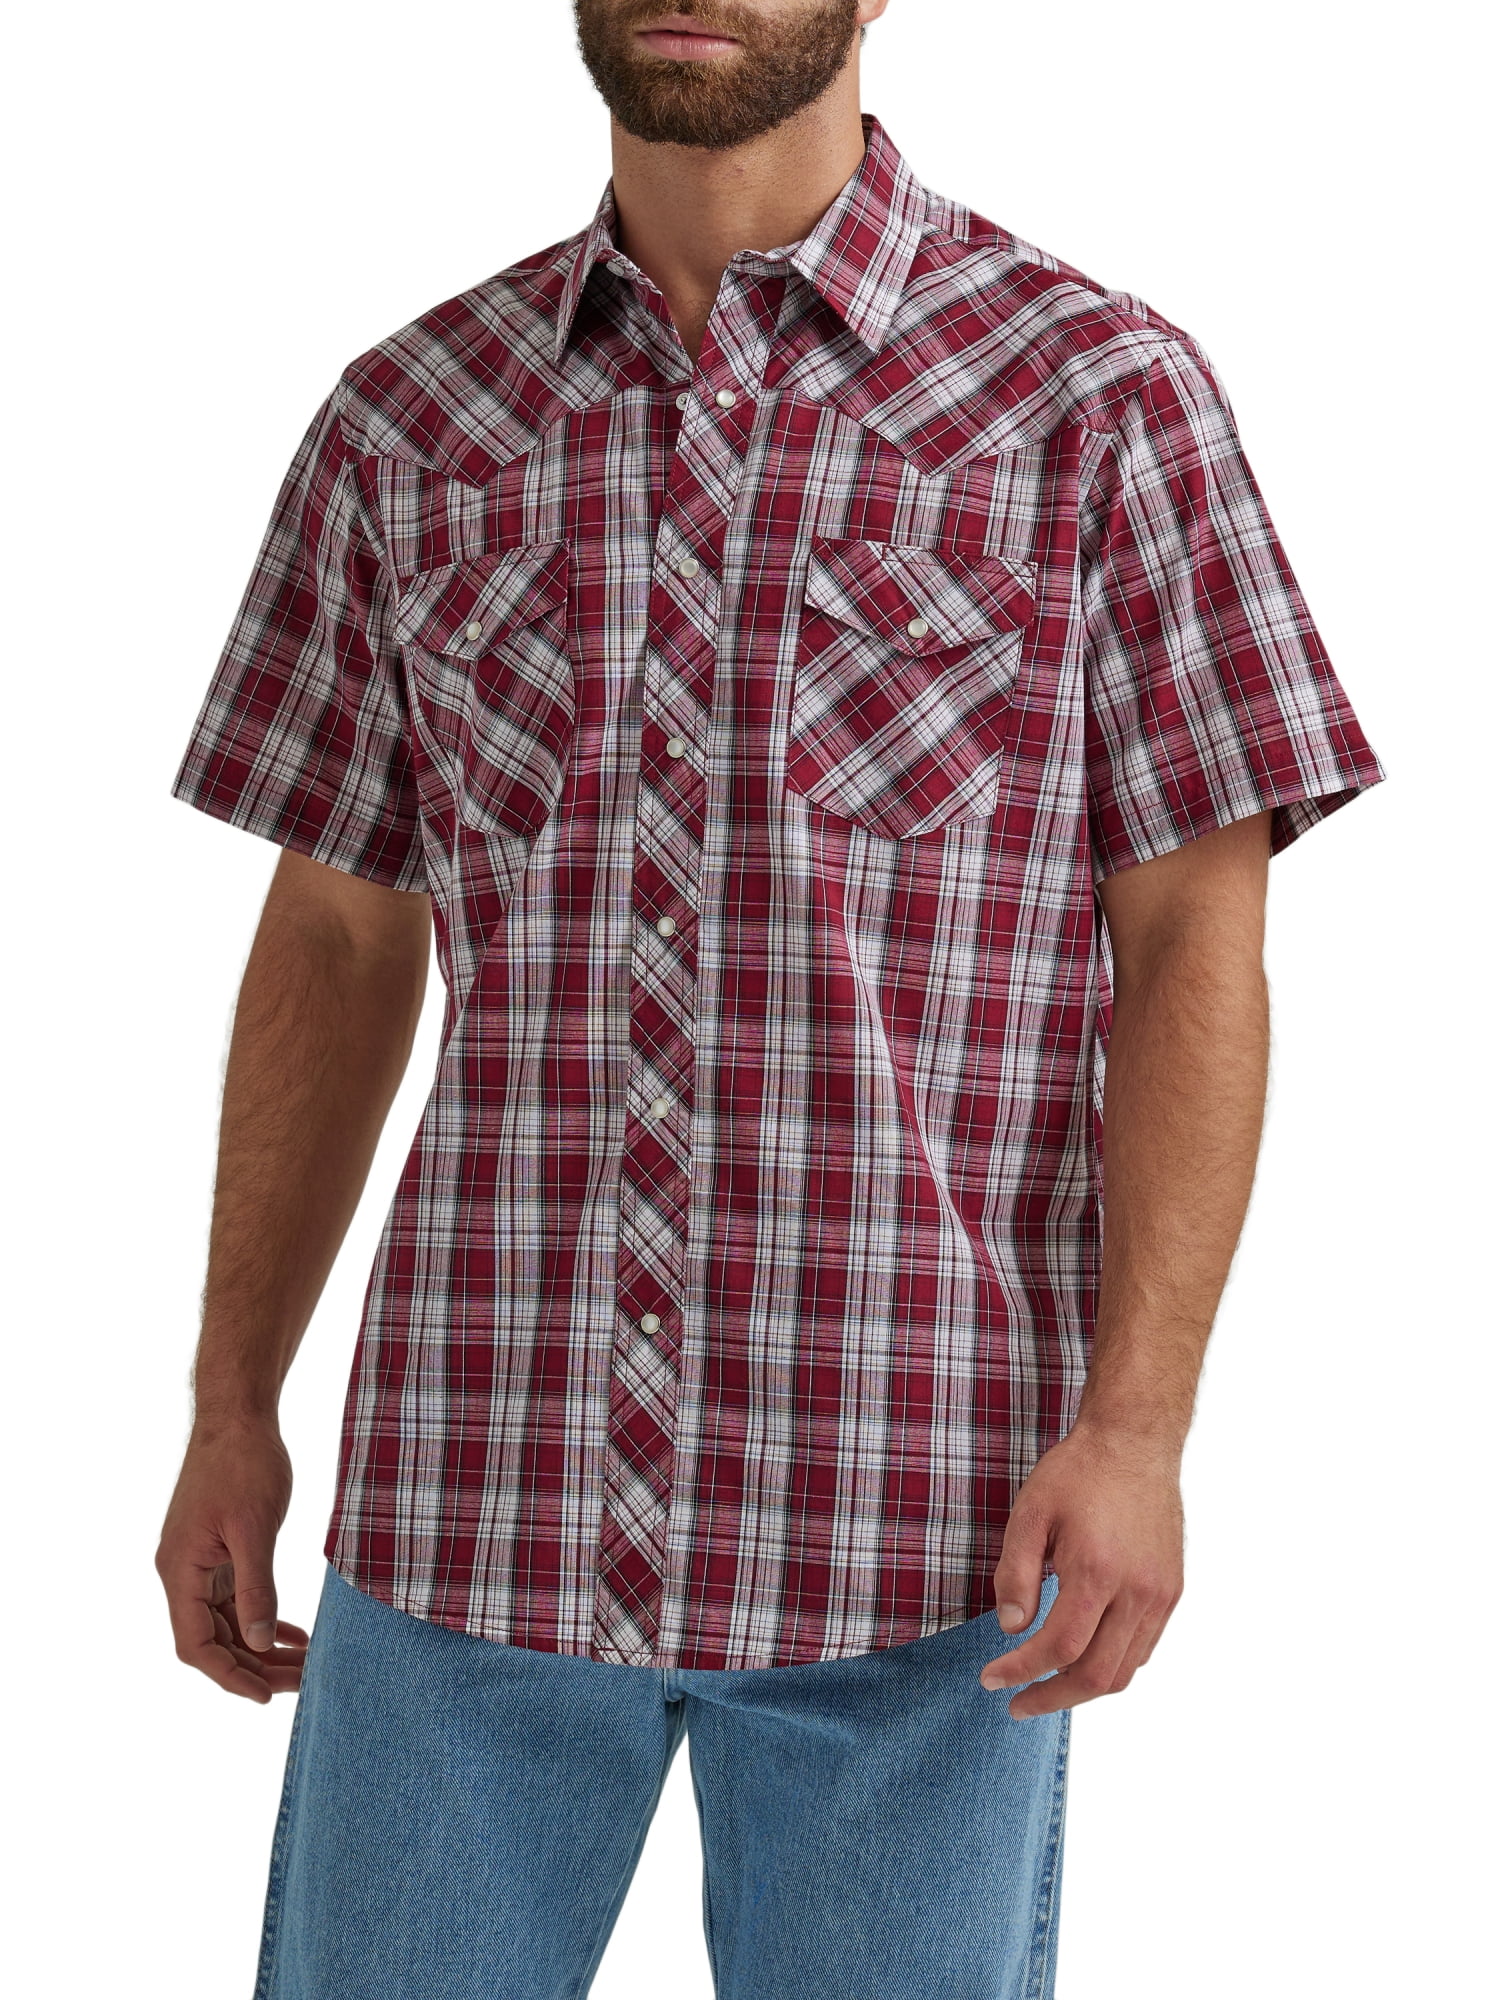 Shop Wrangler Men's Short Sleeve Western Shirt, Size S-5XL - Great ...